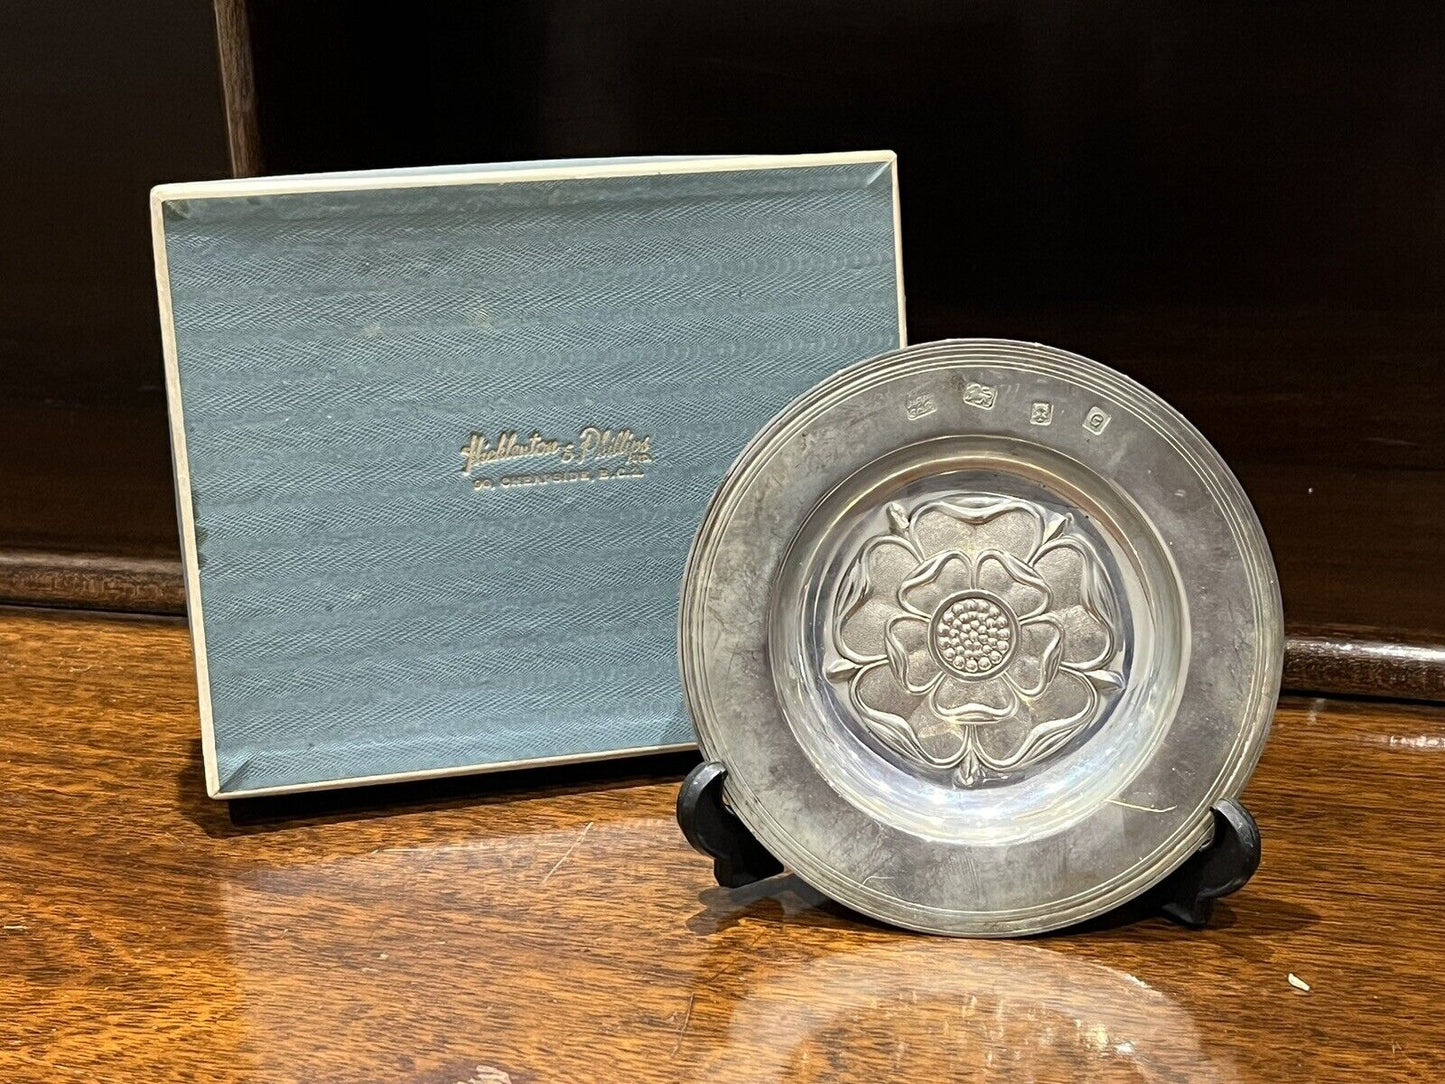 Solid Silver Reproduction Tudor Bowl In Original Box